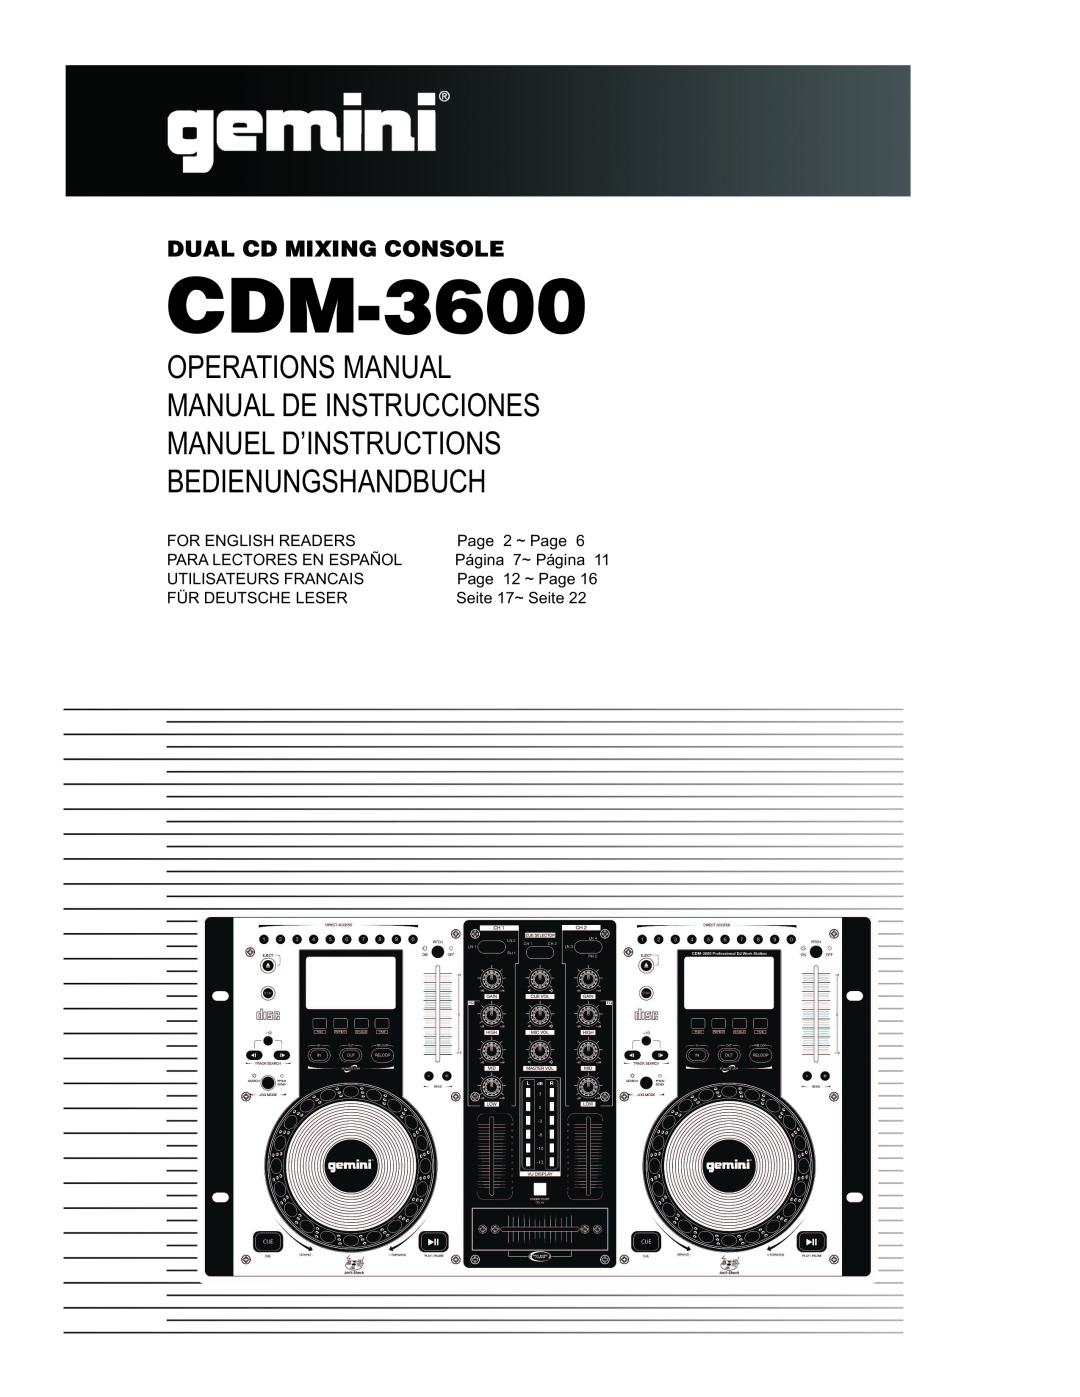 Gemini CDM-3600 manual Dual Cd Mixing Console, Page 2 ~ Page Página 7~ Página Page 12 ~ Page, Seite 17~ Seite 